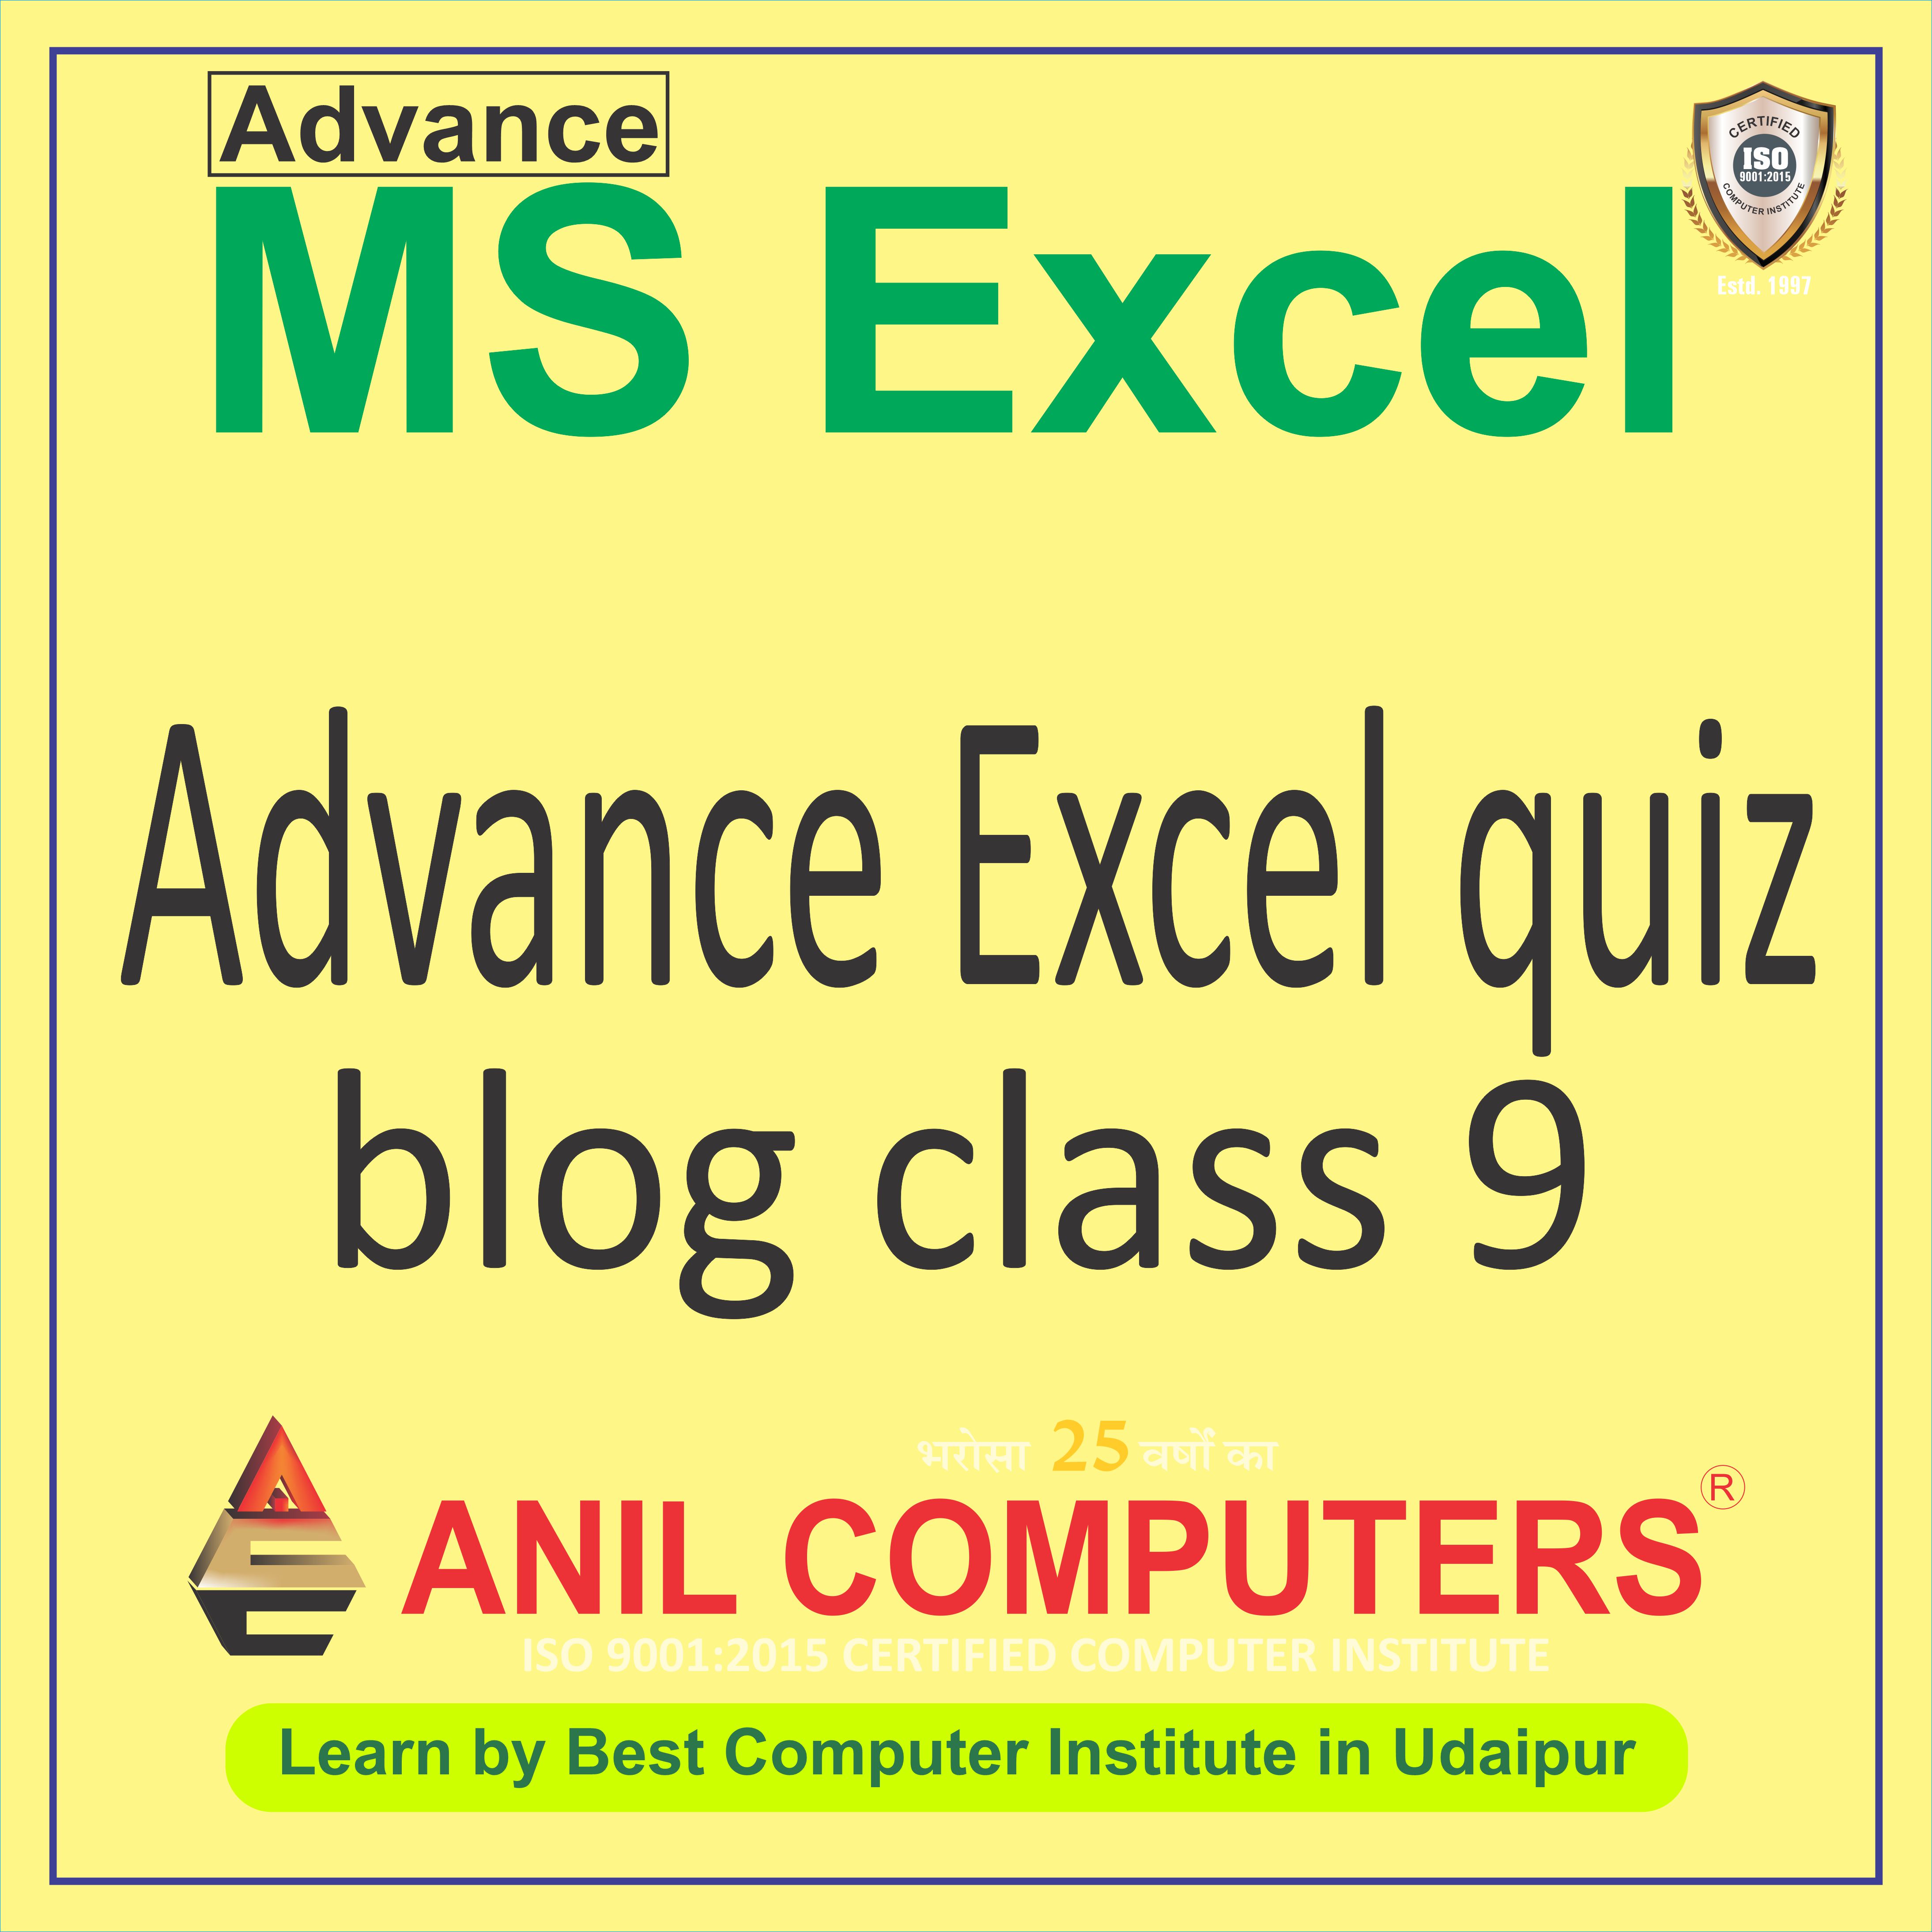 Advance Excel quiz blog class 9